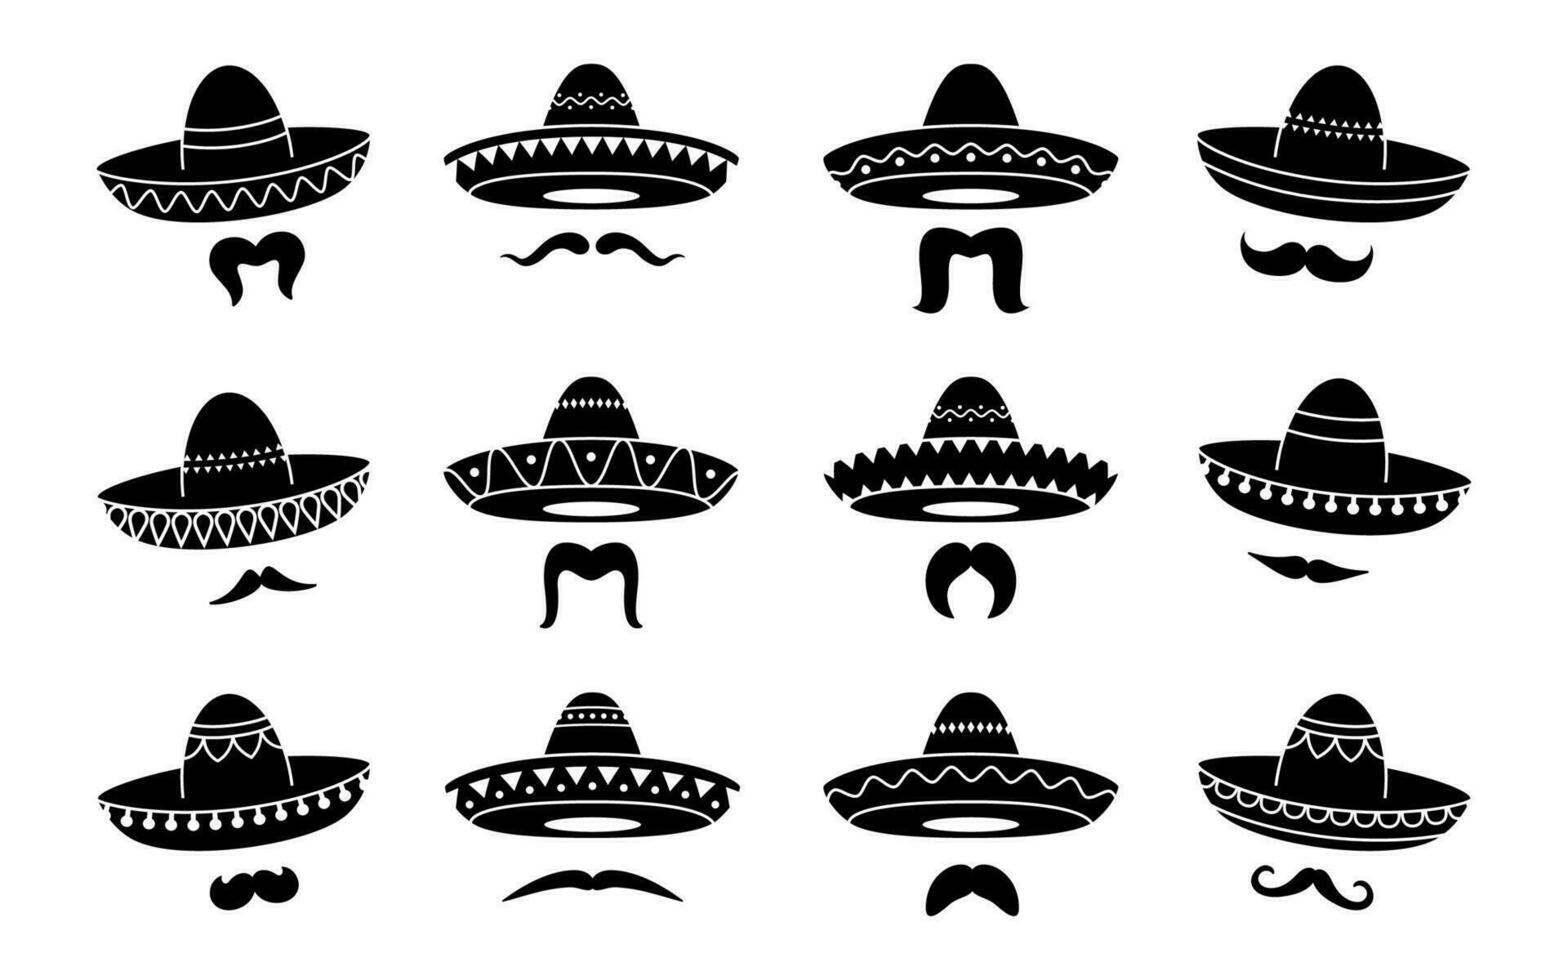 Preto mexicano mariachi sombrero chapéu e bigodes vetor